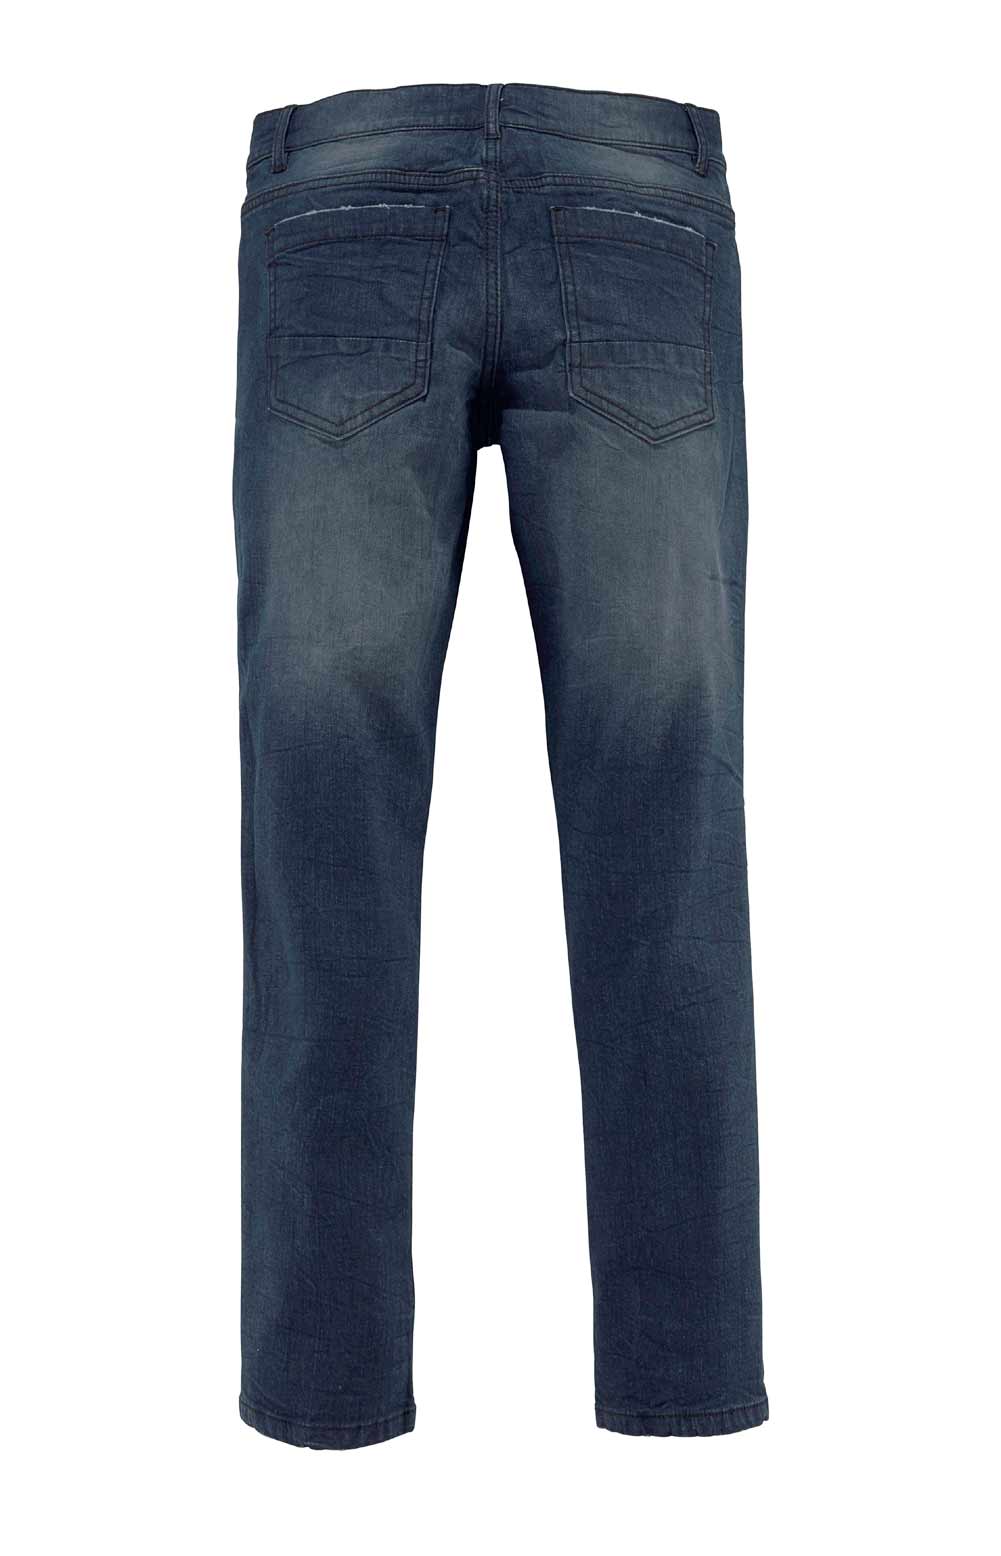 Buffalo Marken-Kinder-Jeans, dunkelblau